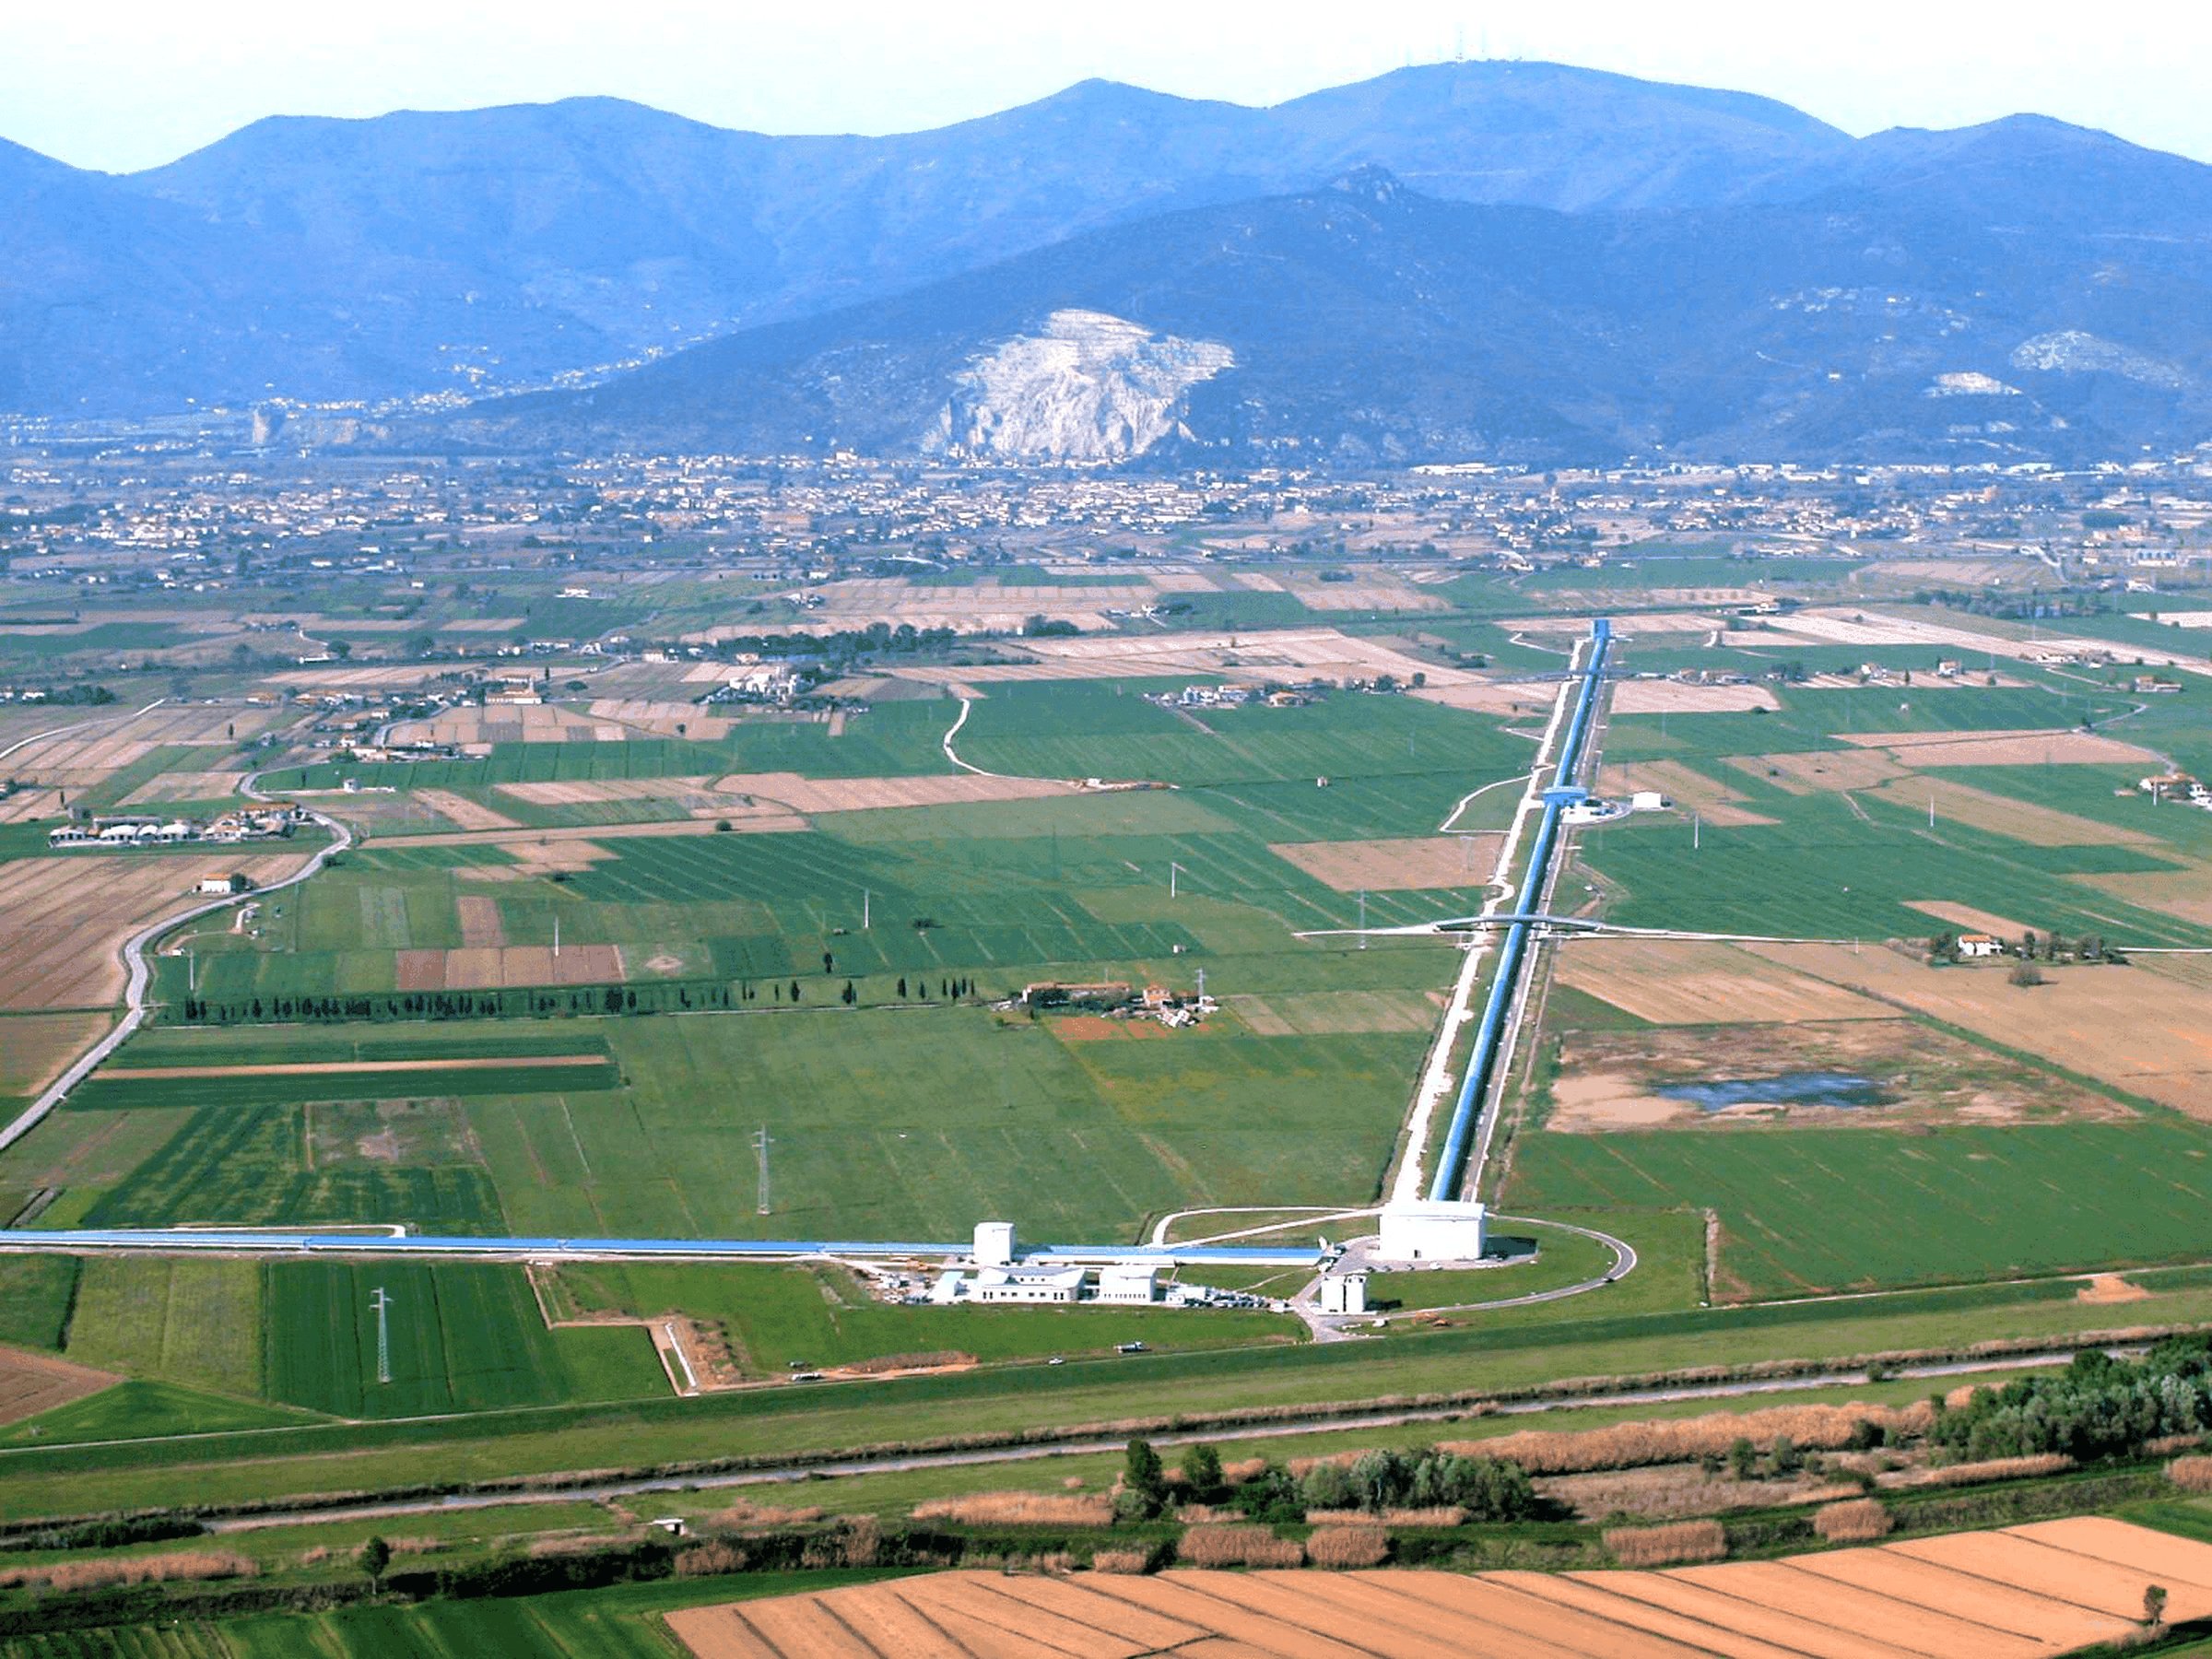 The Virgo observatory near Pisa, Italy.